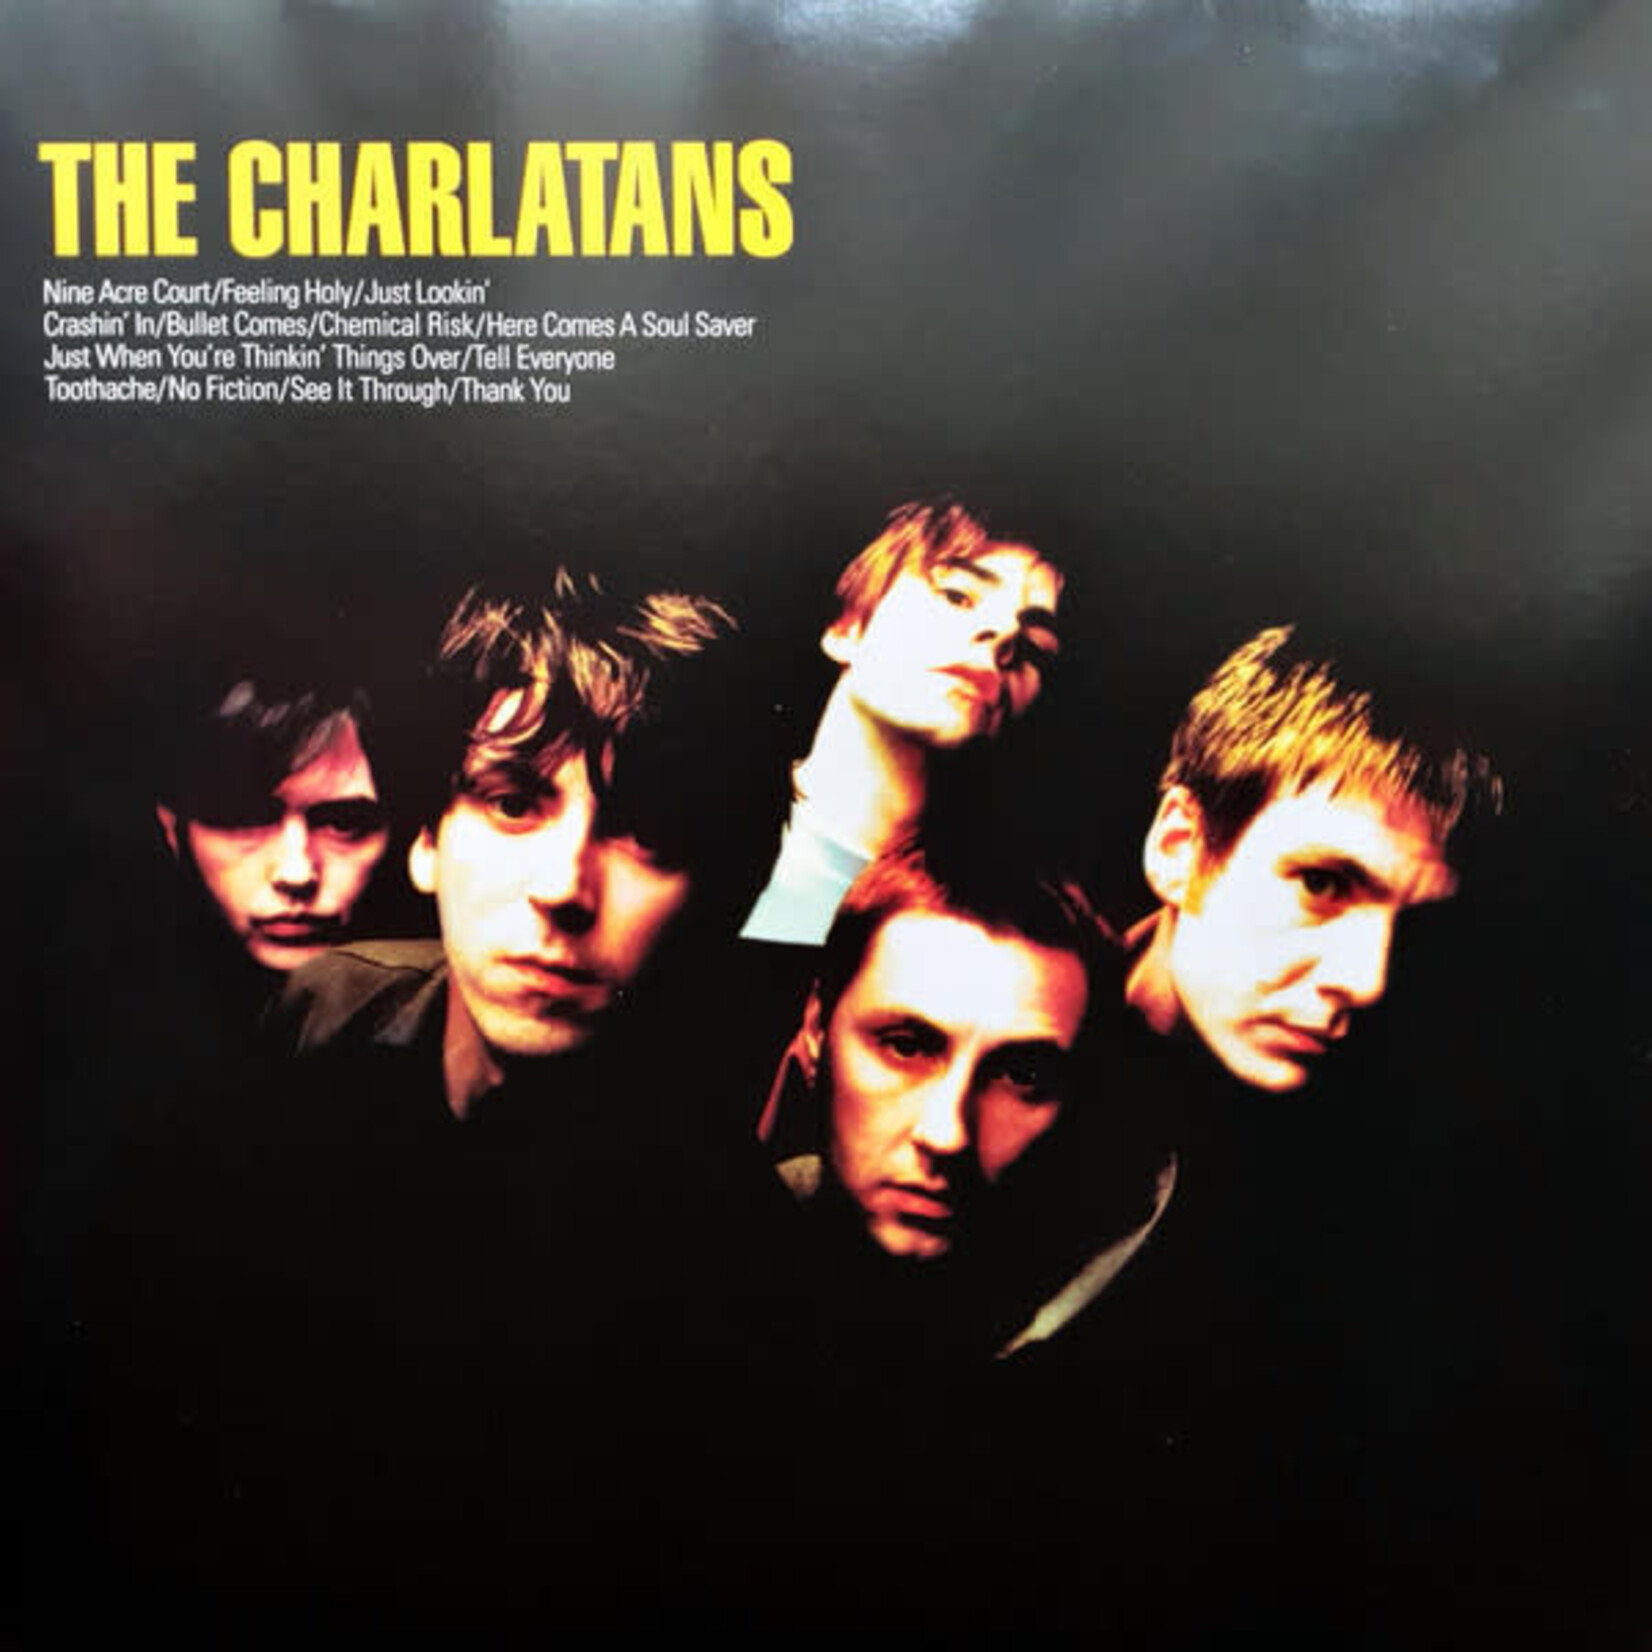 [New] Charlatans UK - The Charlatans (2LP, colour vinyl, Abbey Road remaster)